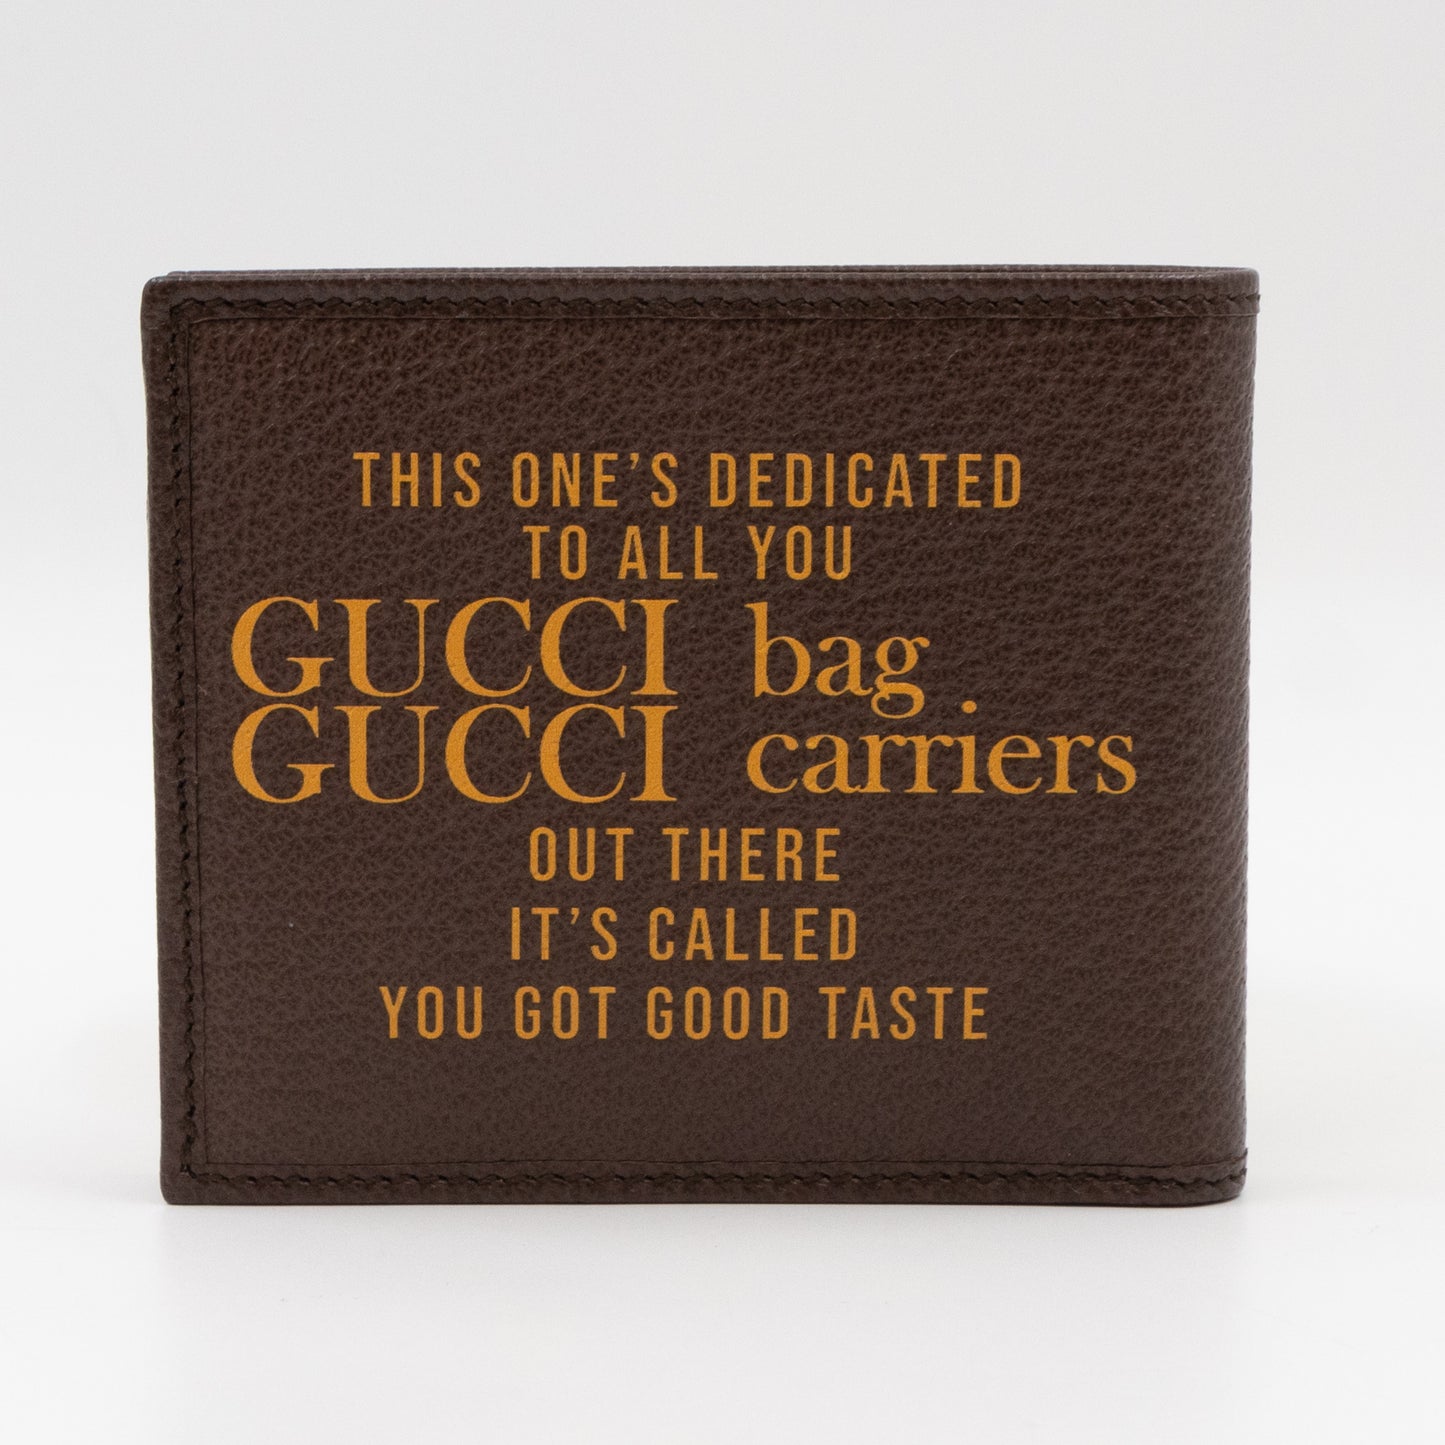 Gucci 100 Bi-Fold Wallet Brown Leather